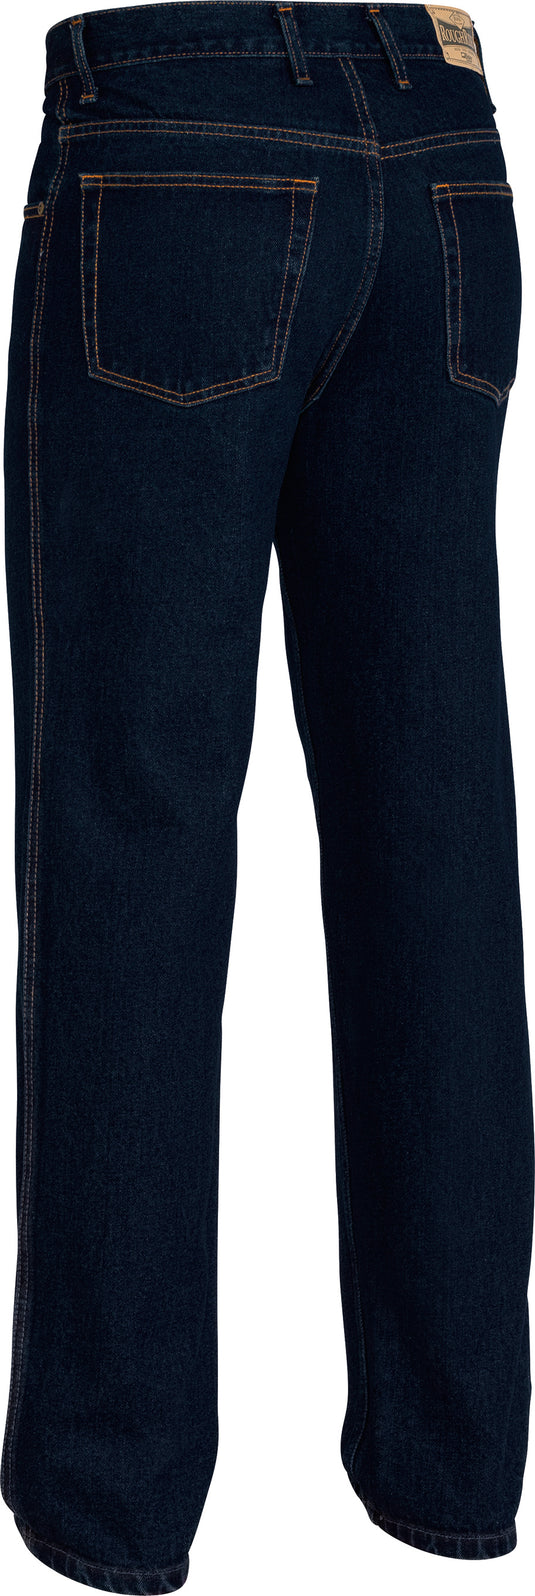 Wholesale BP6050 Bisley Rough Rider Denim Jeans - Stout Printed or Blank